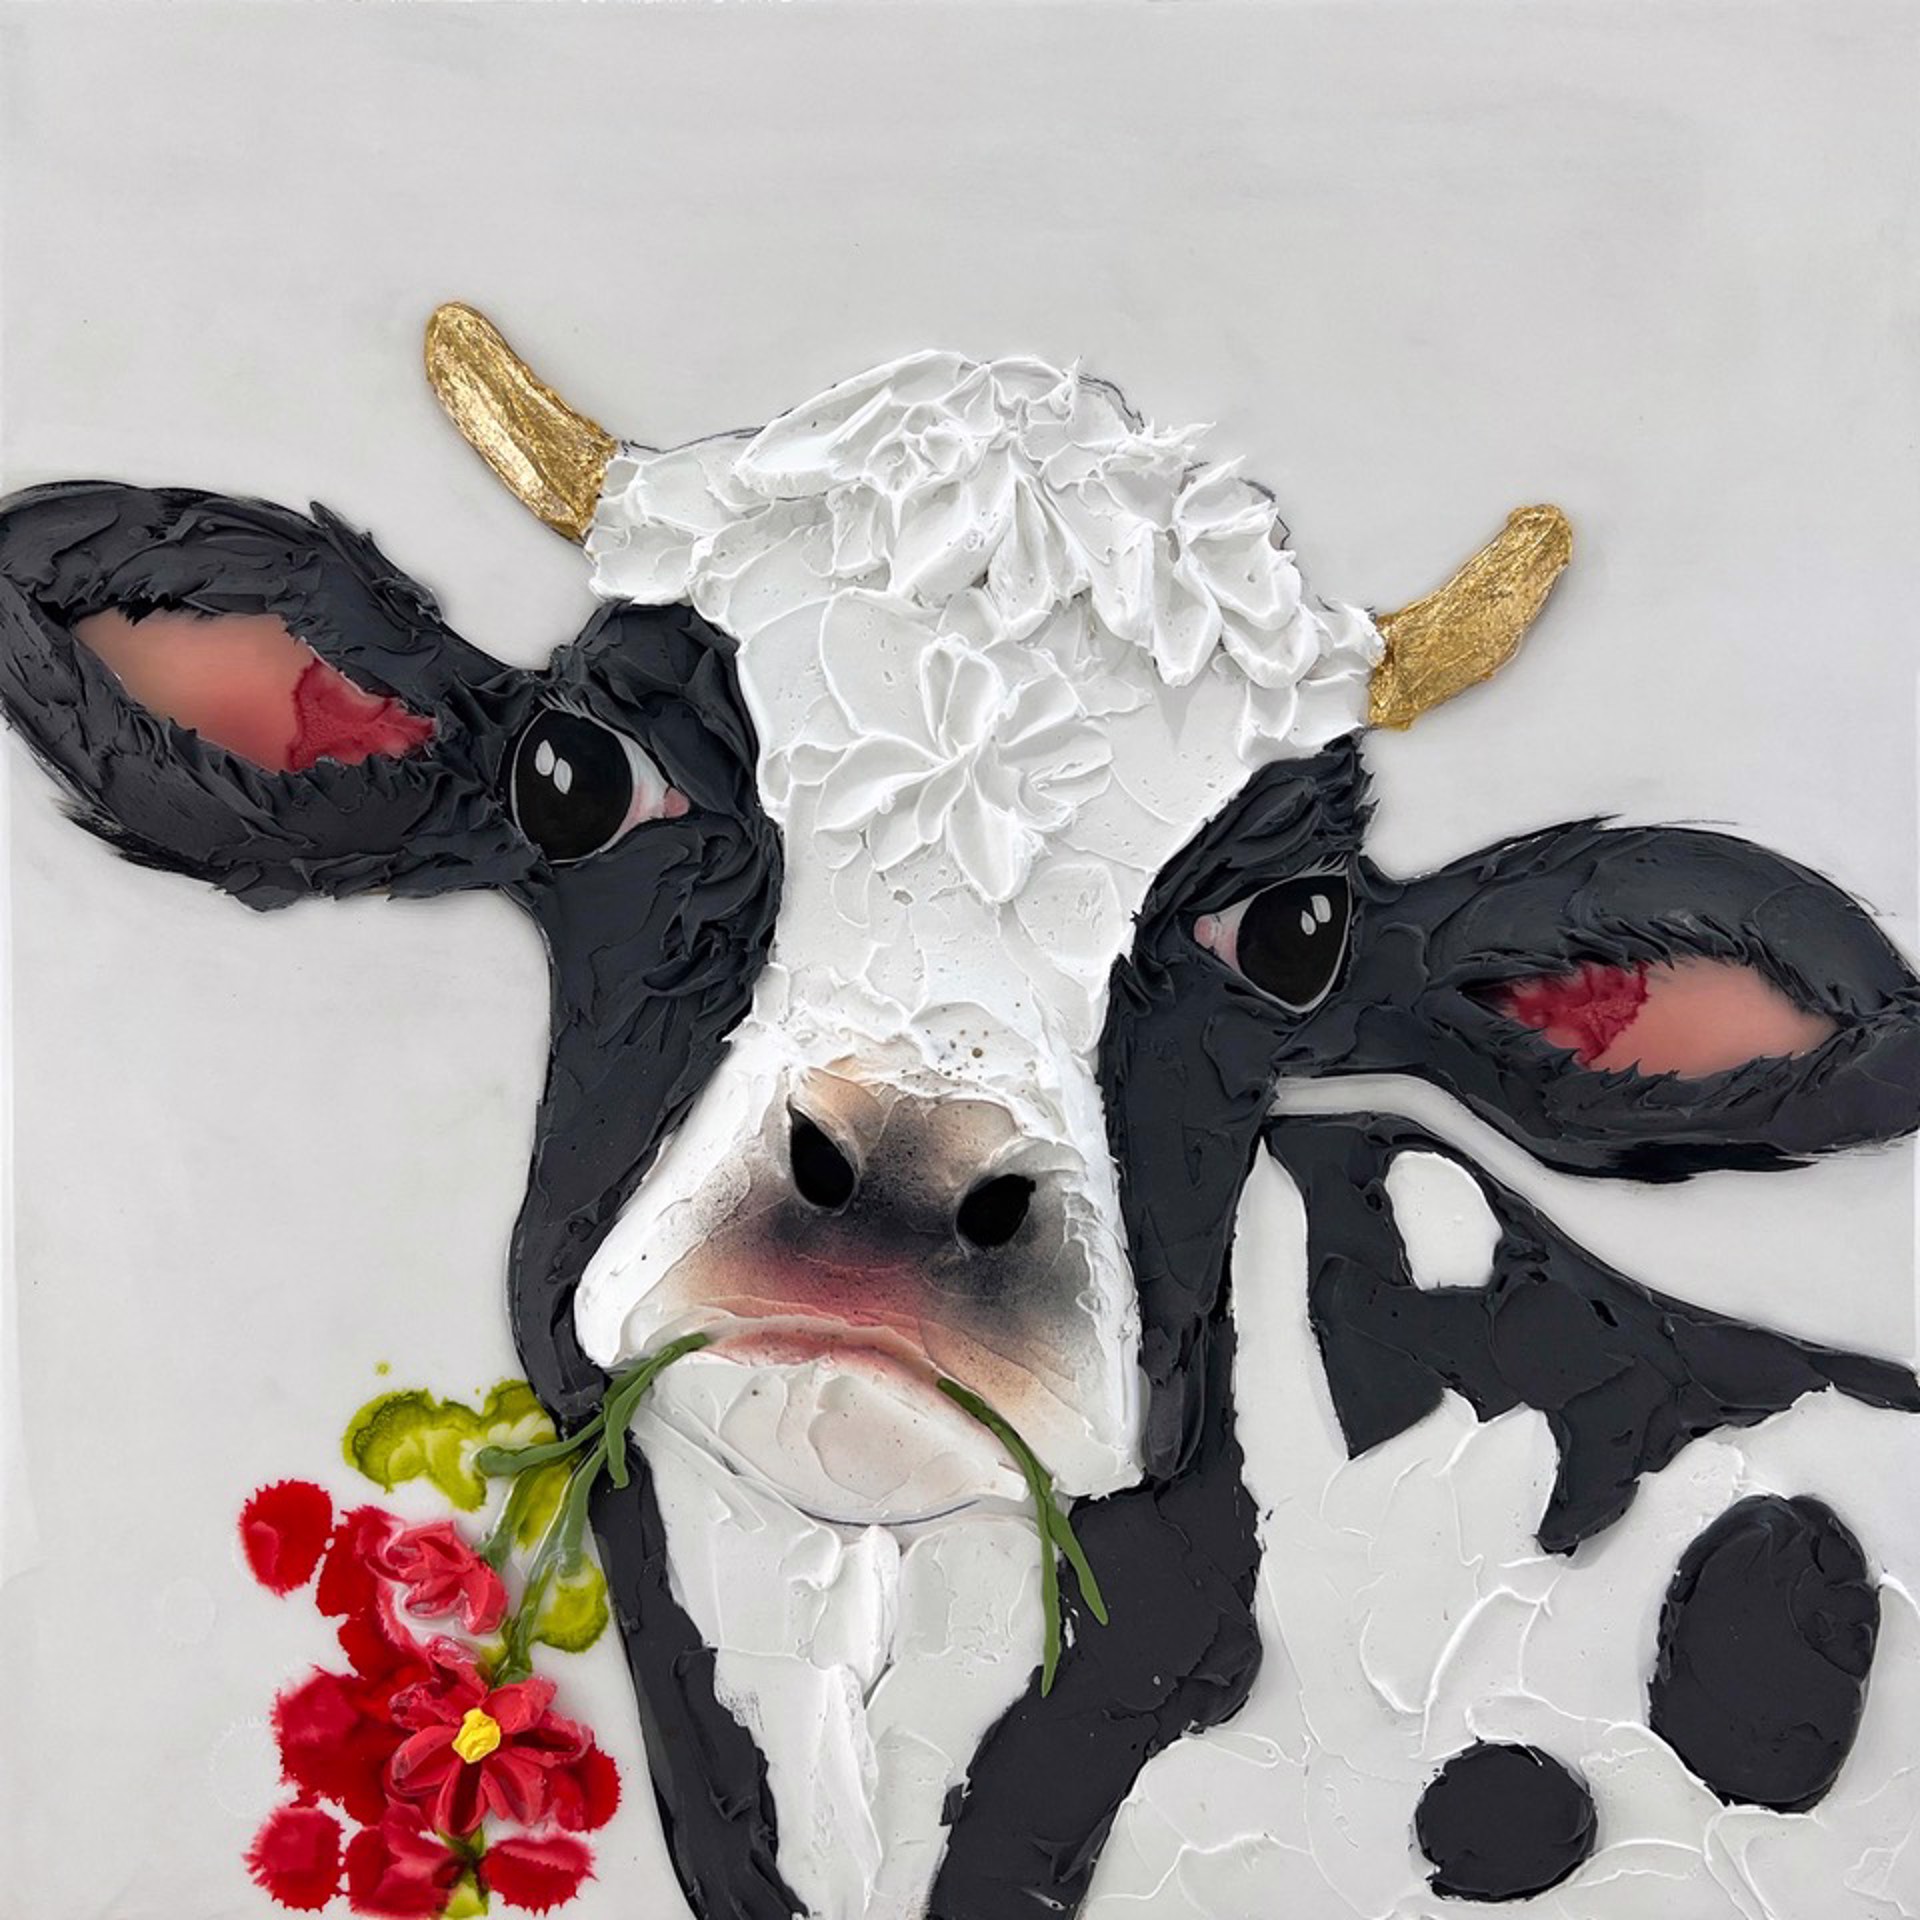 A Cow Dreaming by Nicoletta Belletti